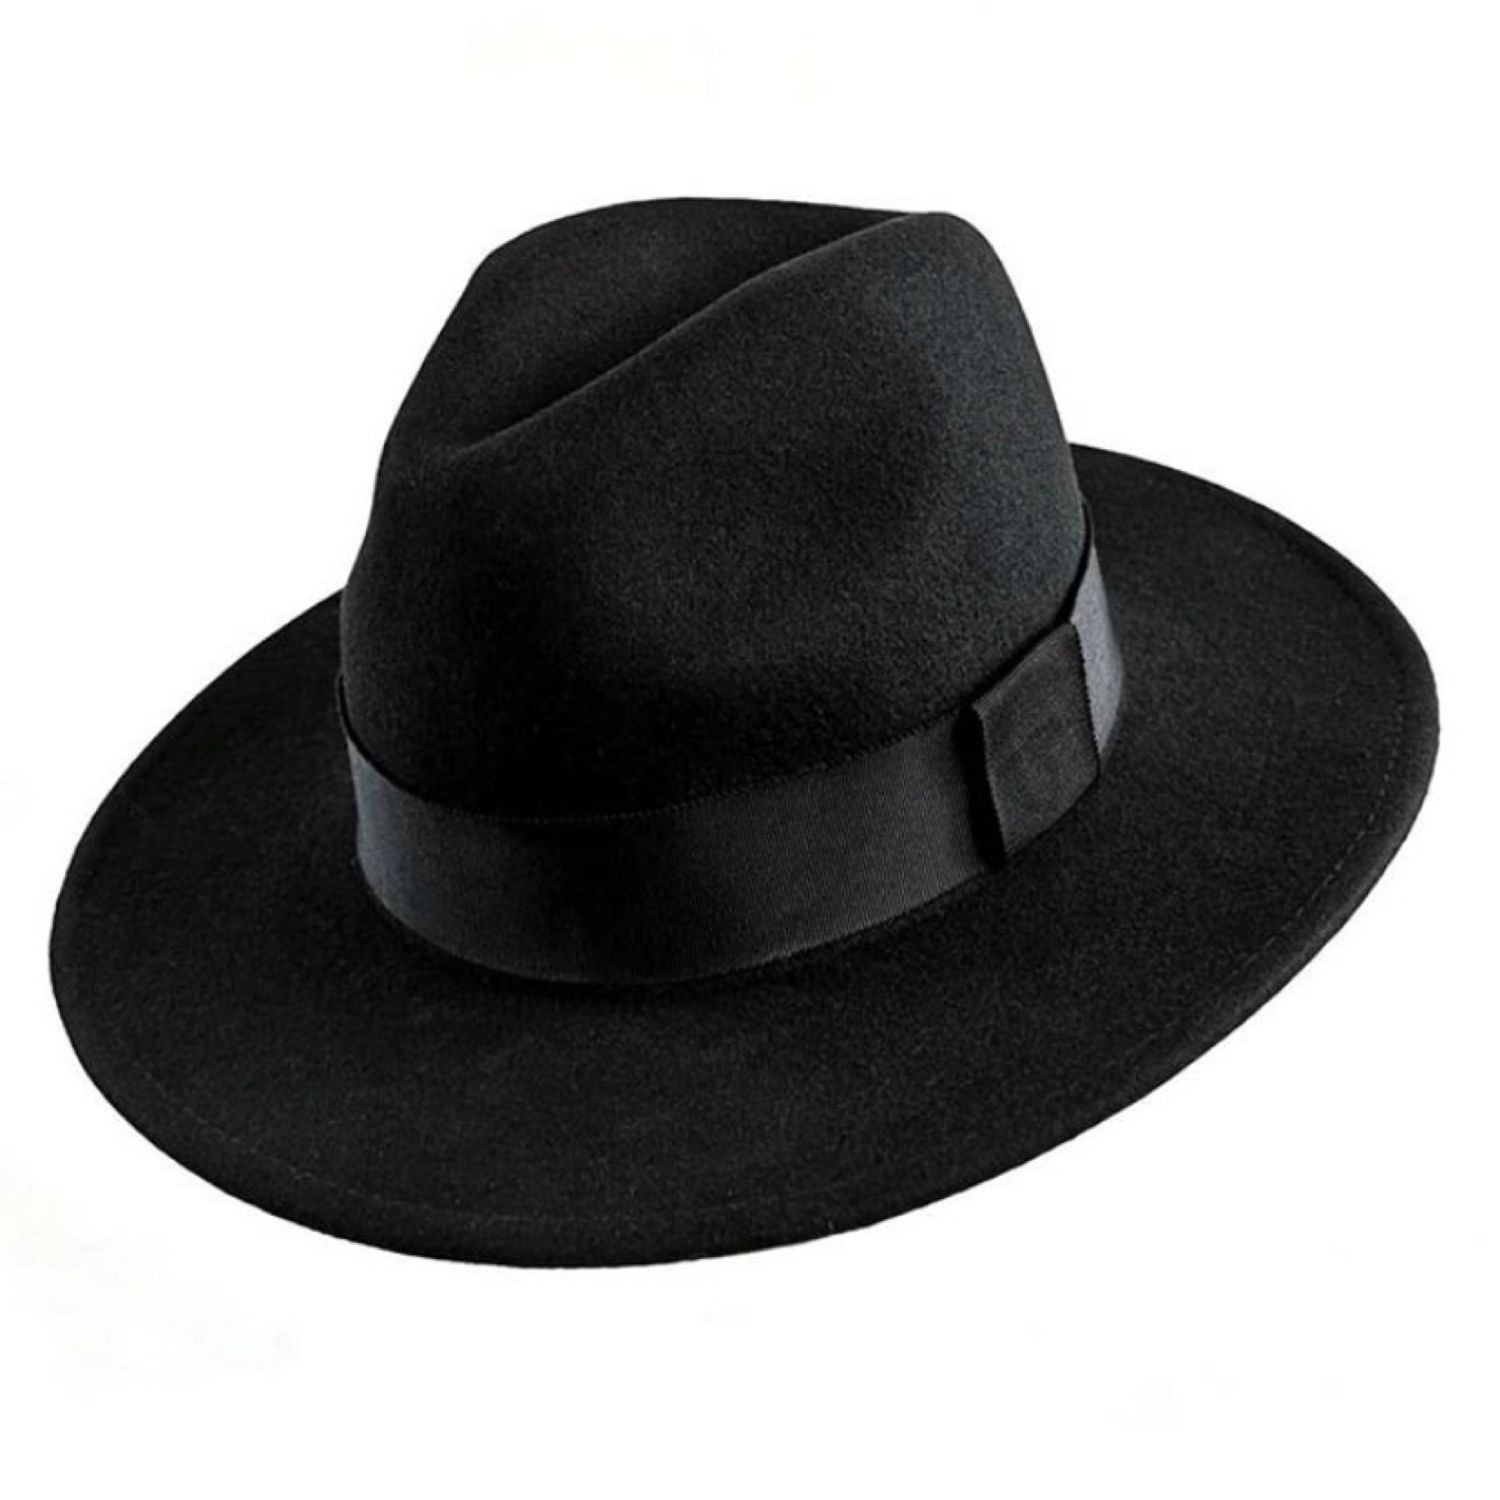 Шляпа адрес. Феттер ткань шляпа мужская. Шляпа мужская Федора Монтгомери. Шляпа мужские валберис. Шляпа Федора мужская широкополая.